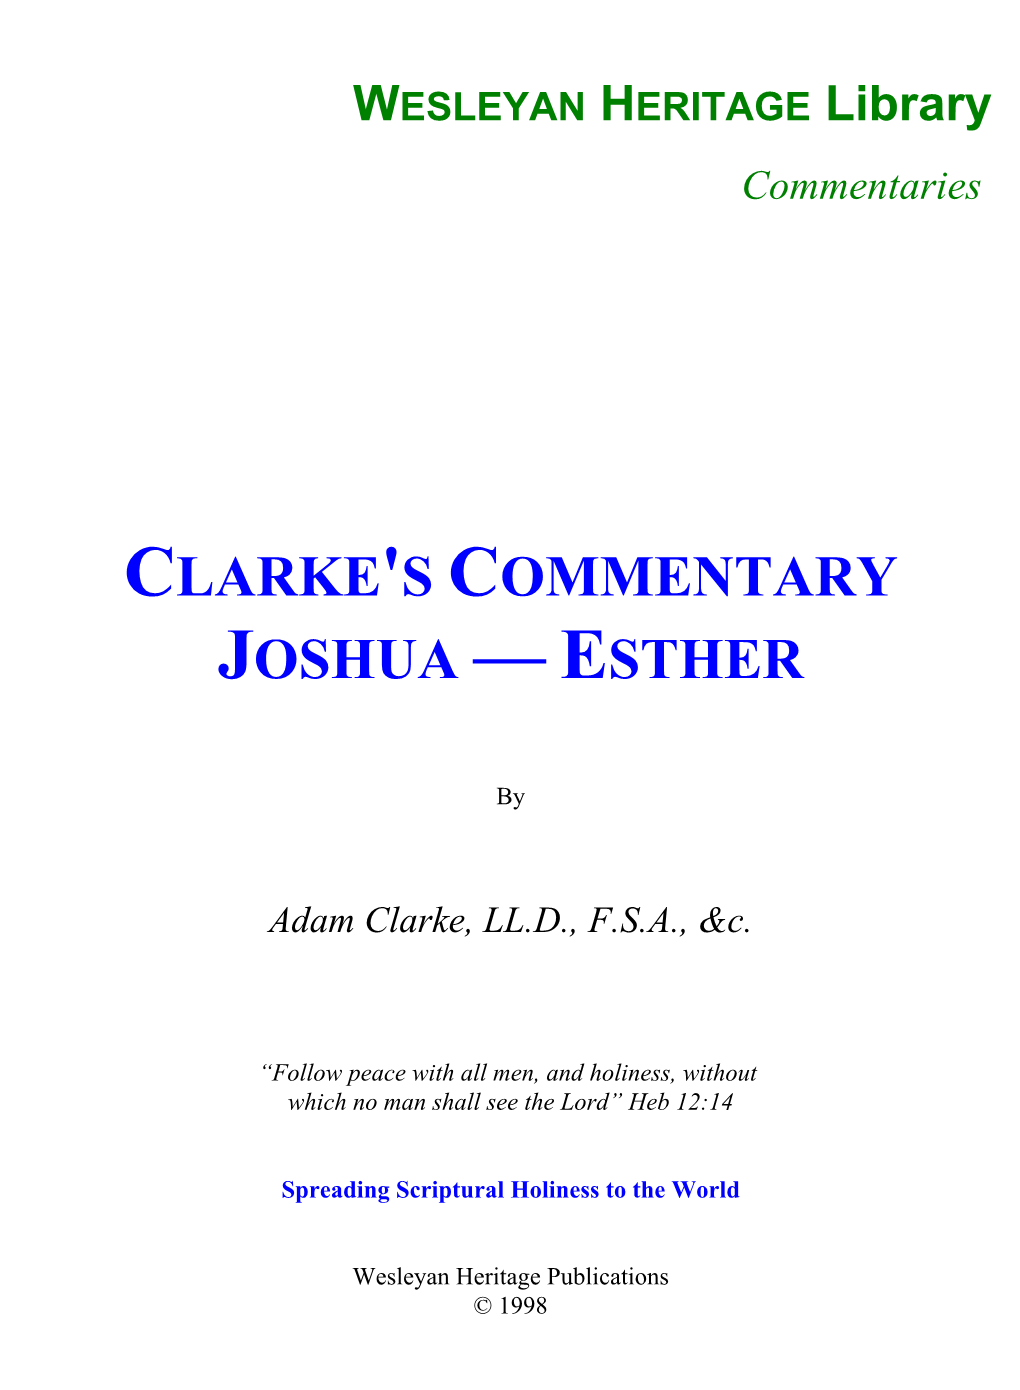 Clarke's Commentary Joshua — Esther